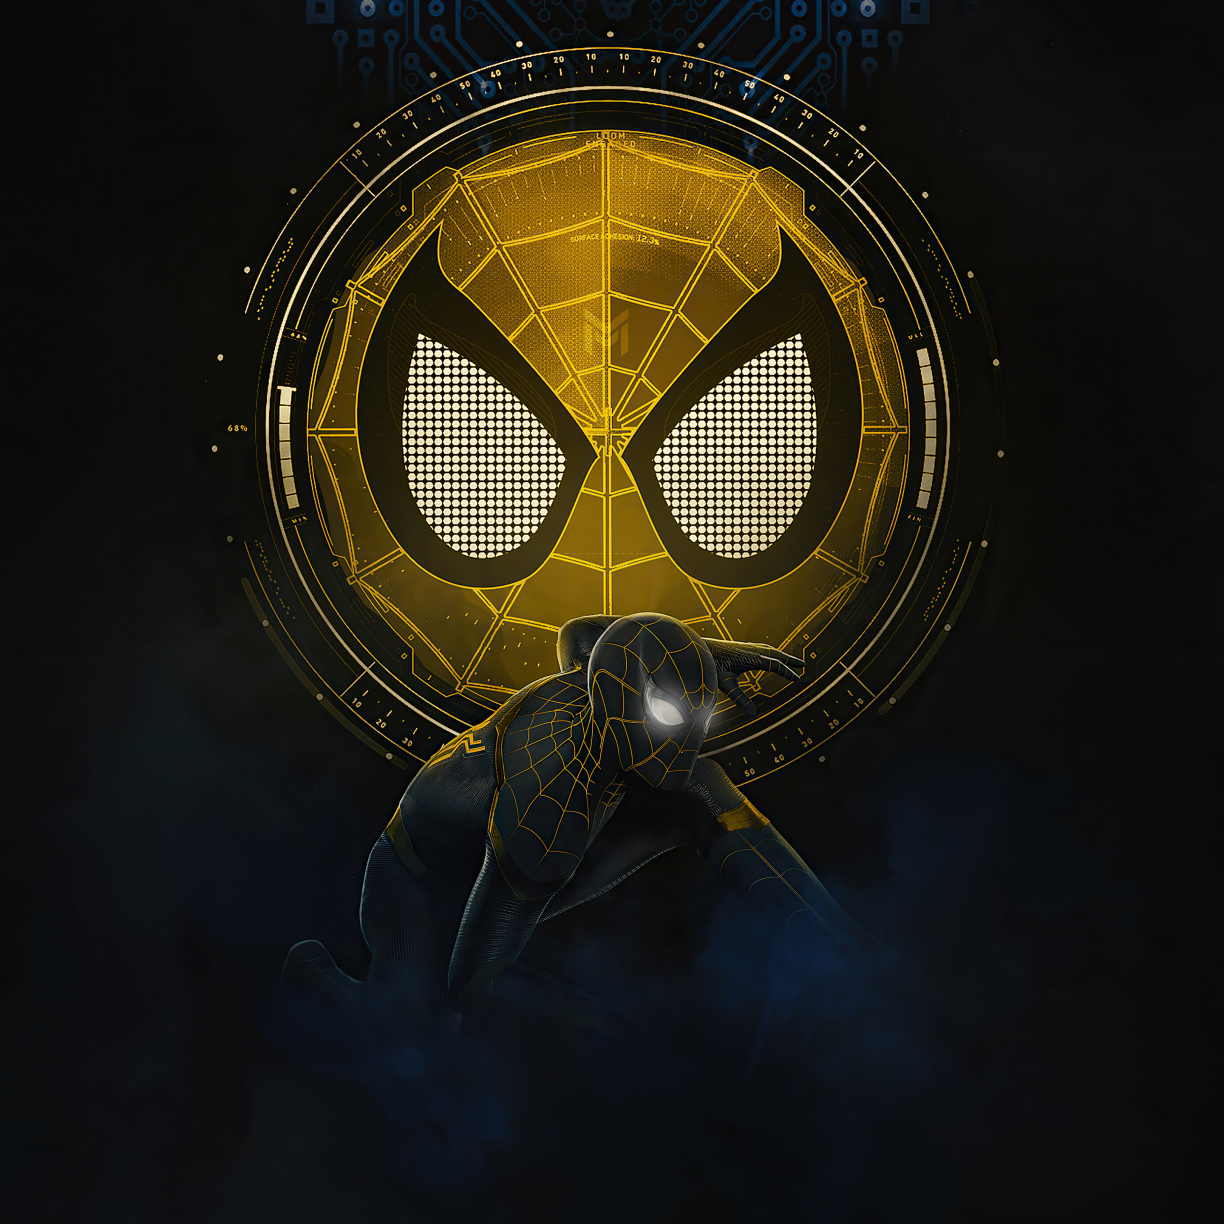 Spider Man No Way Home 2021 Movie 4K Wallpapers